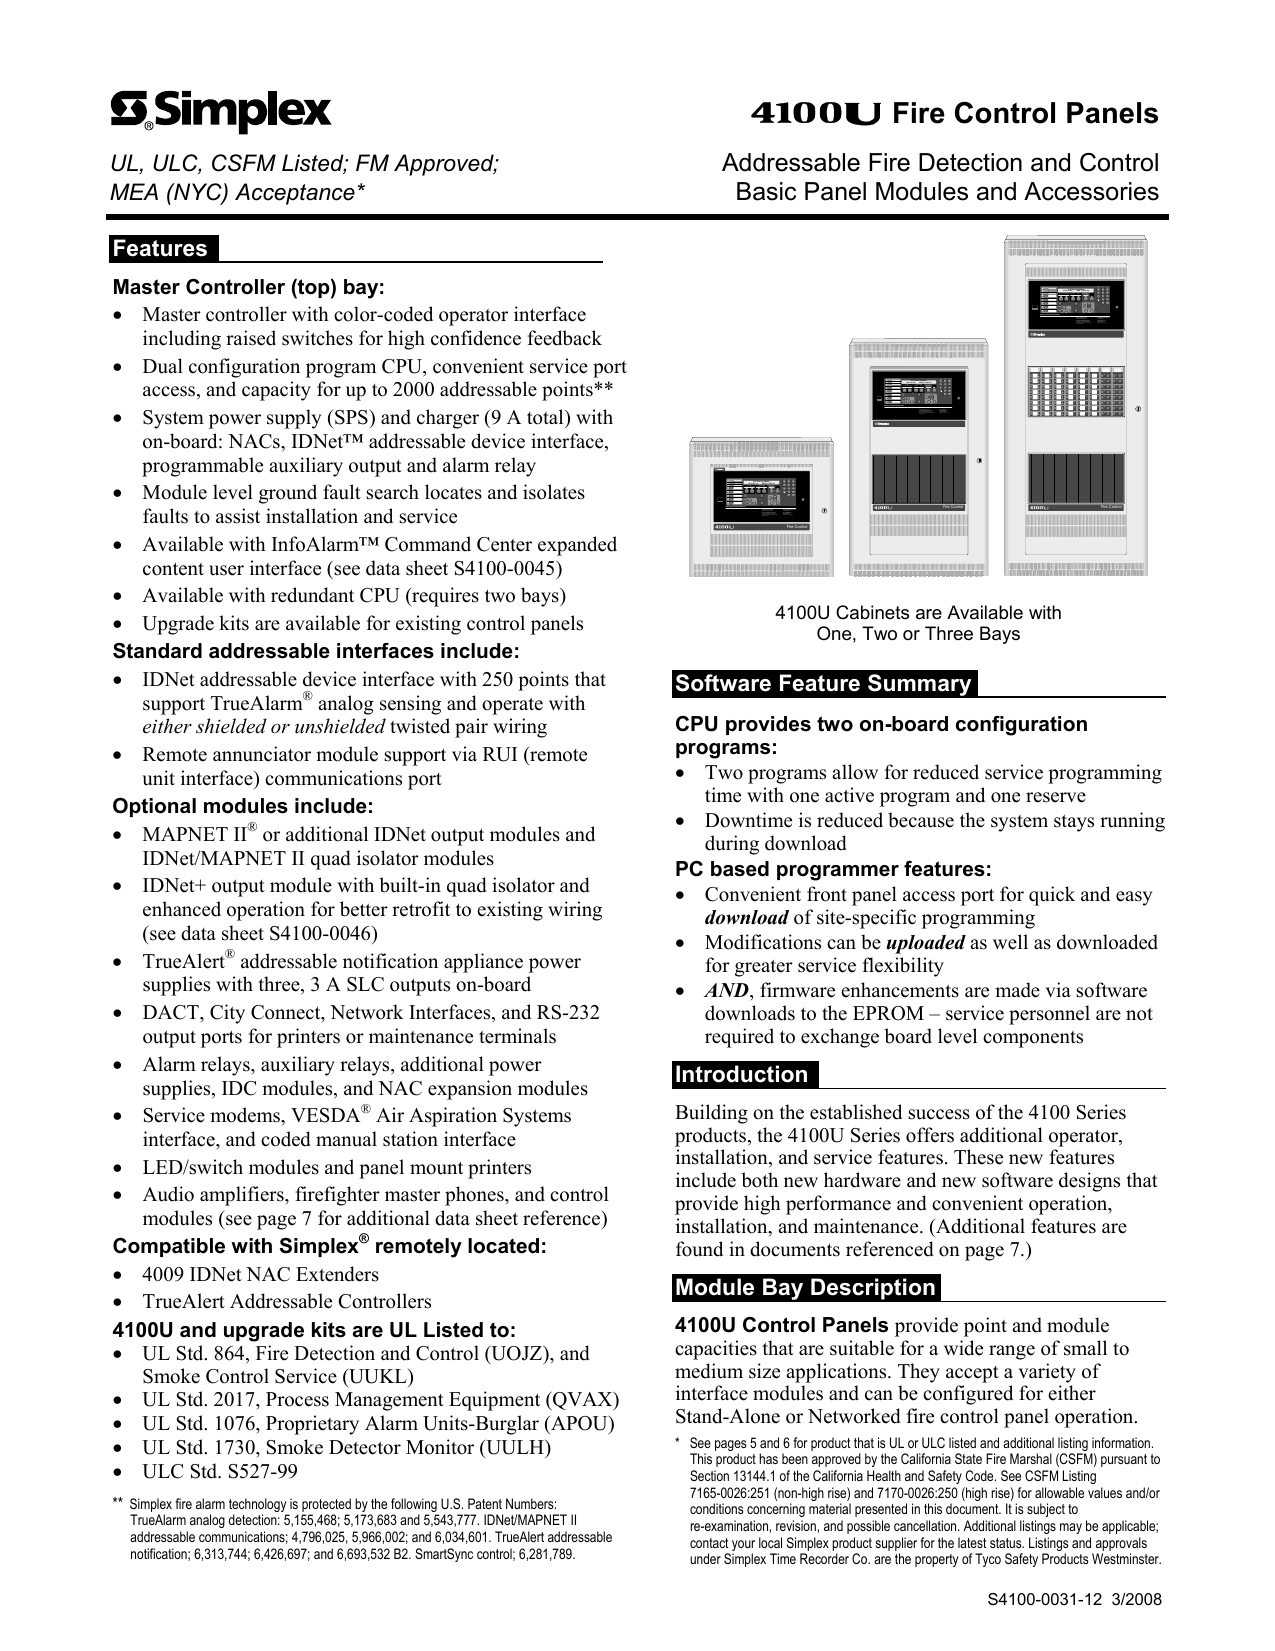 Simplex 4100-7150 MASTER CONTROLLER UPGRADE LCD ANNUNCIATOR 